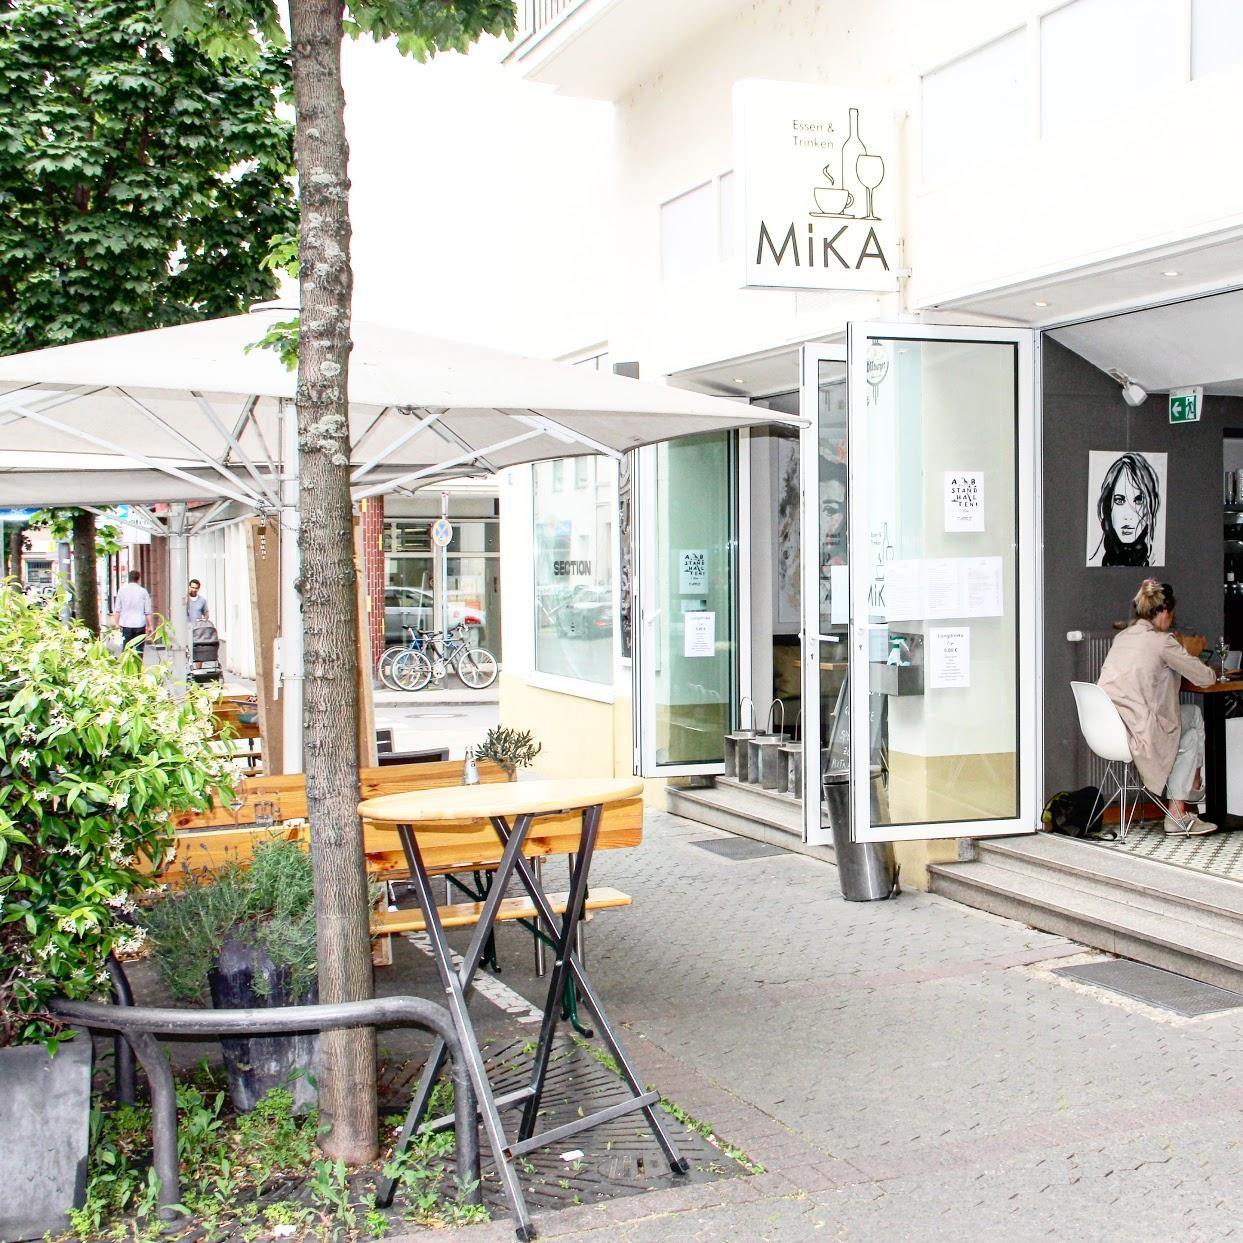 Restaurant "Mika" in Frankfurt am Main